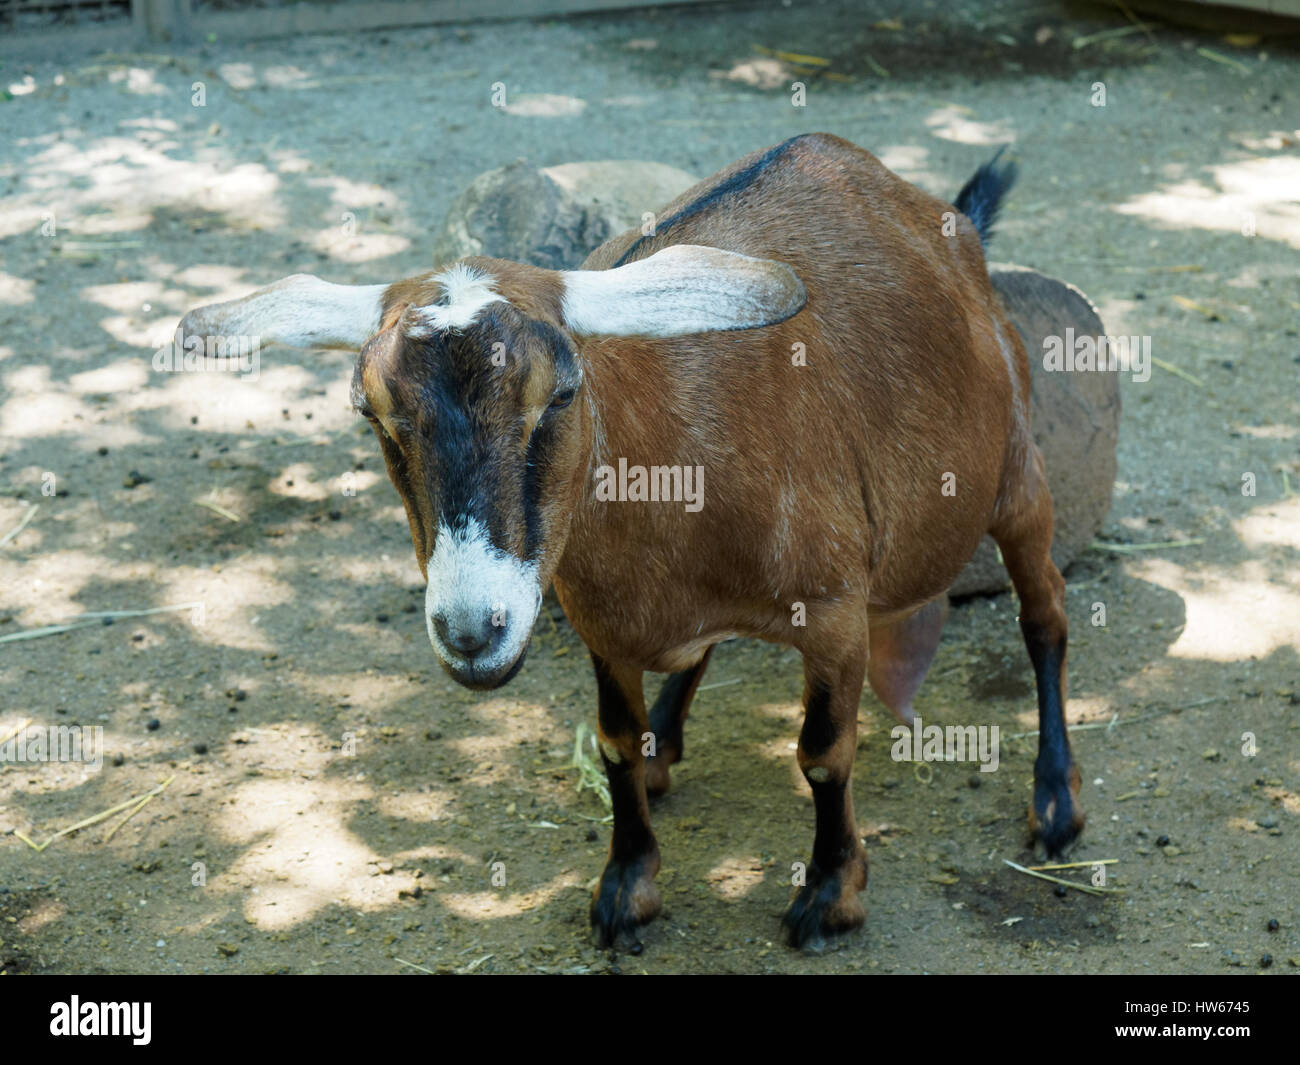 Goat, Central Park, New York, USA Stock Photo